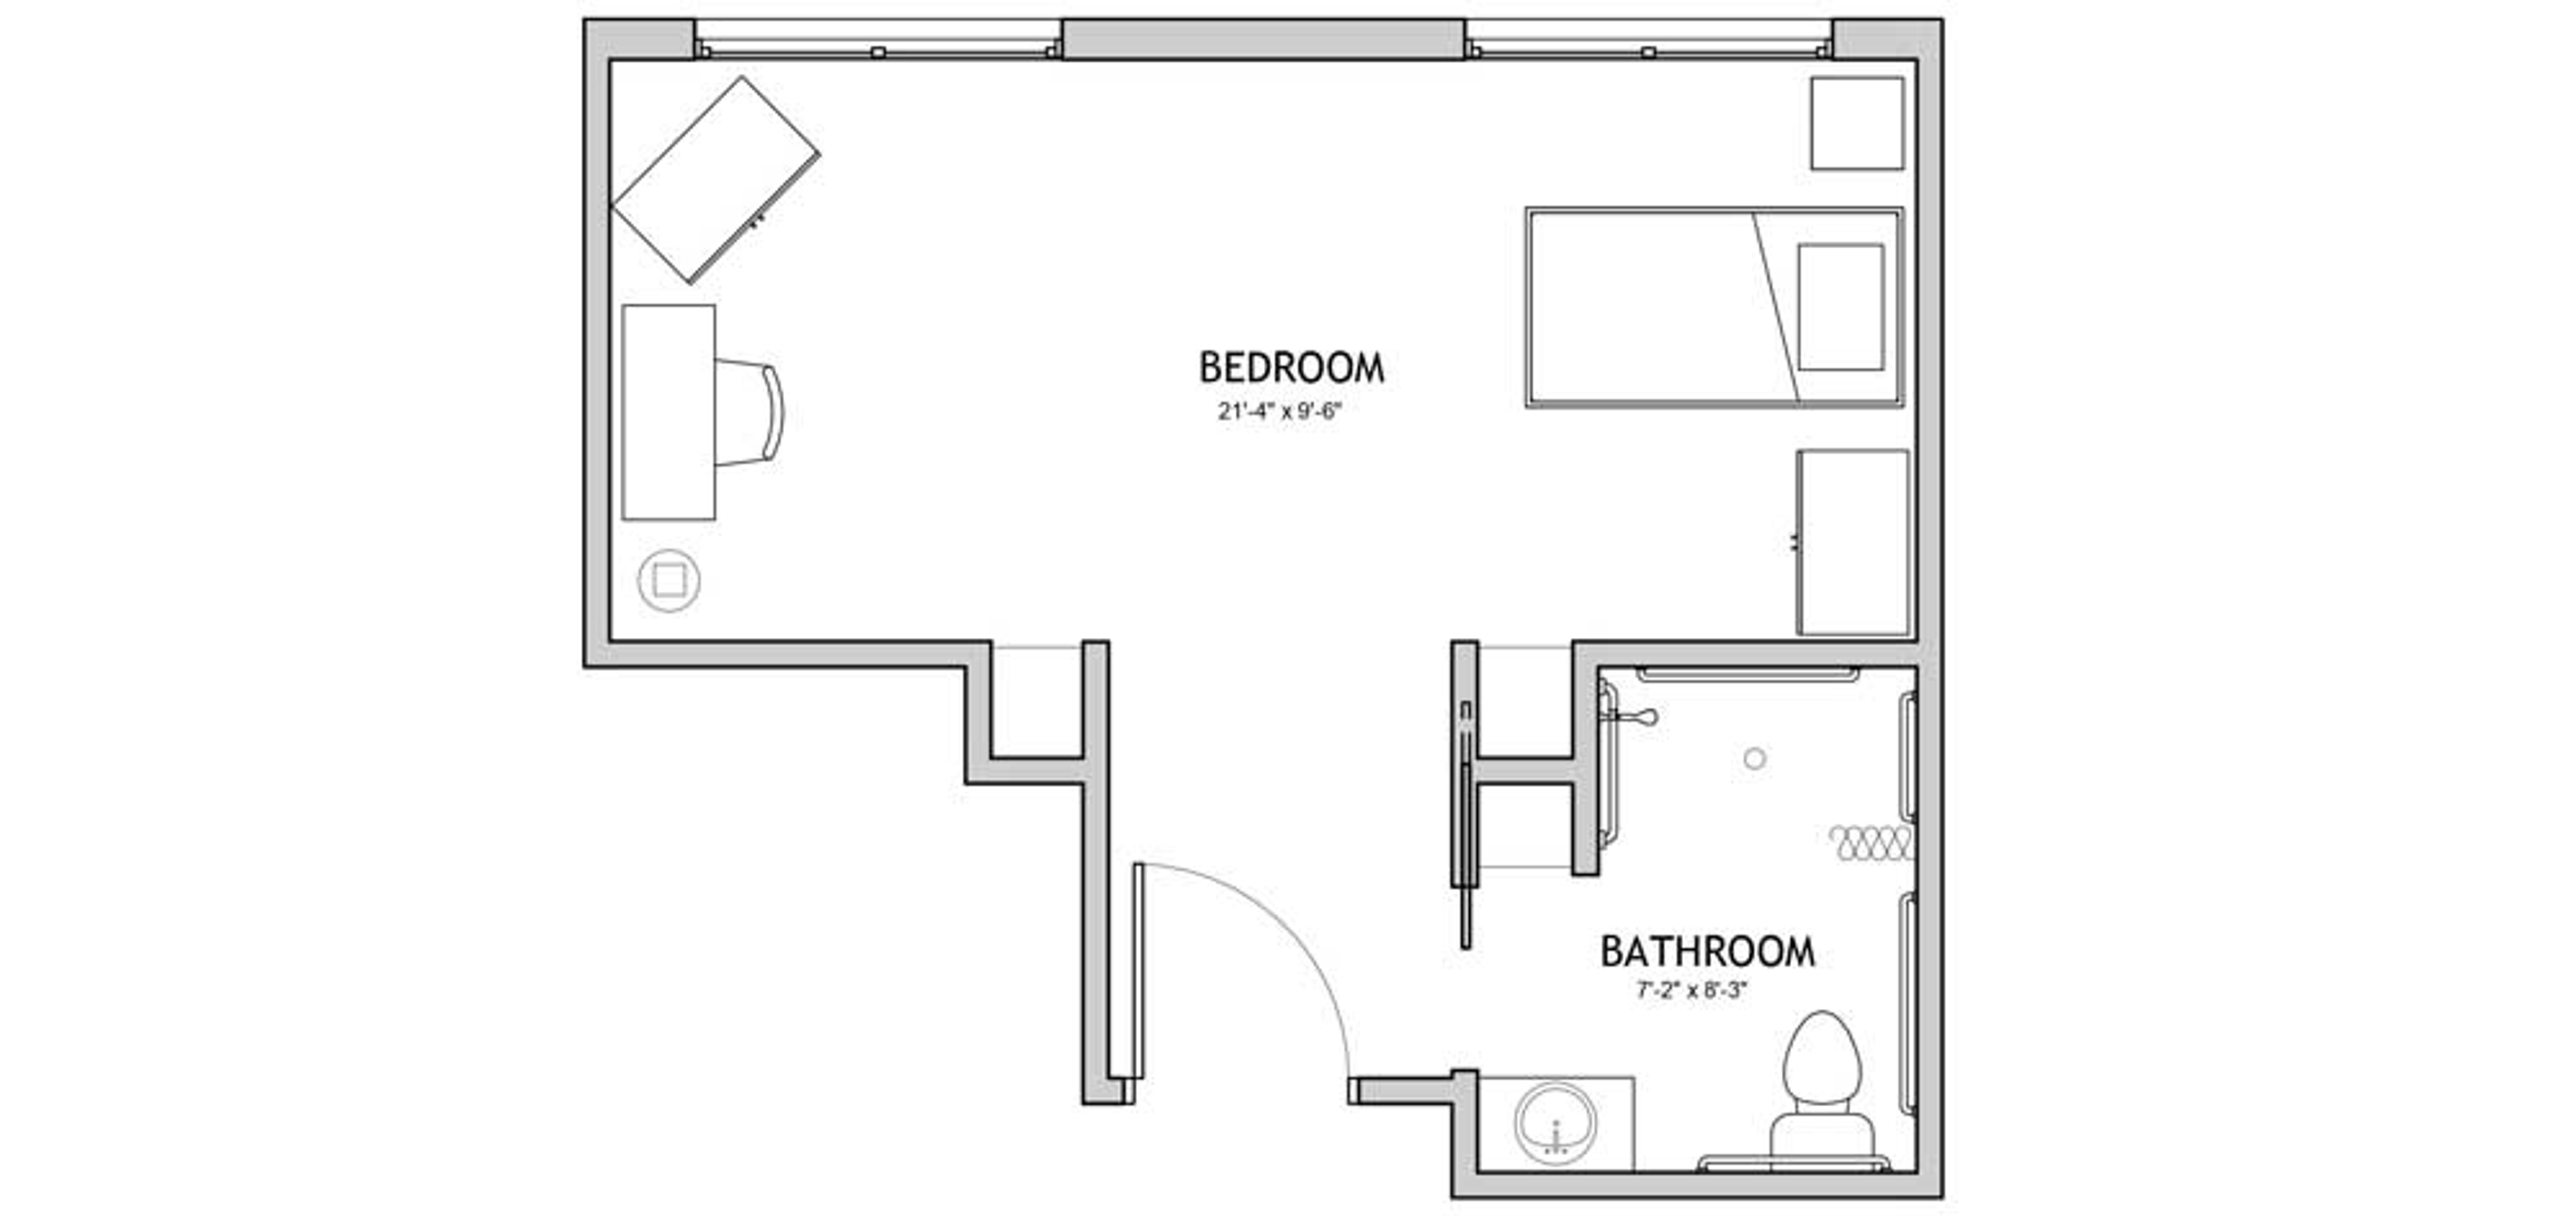 Floorplan - The Auberge at Brookfield - 1 bed, 1 bath, 341 sq. ft. Memory Care